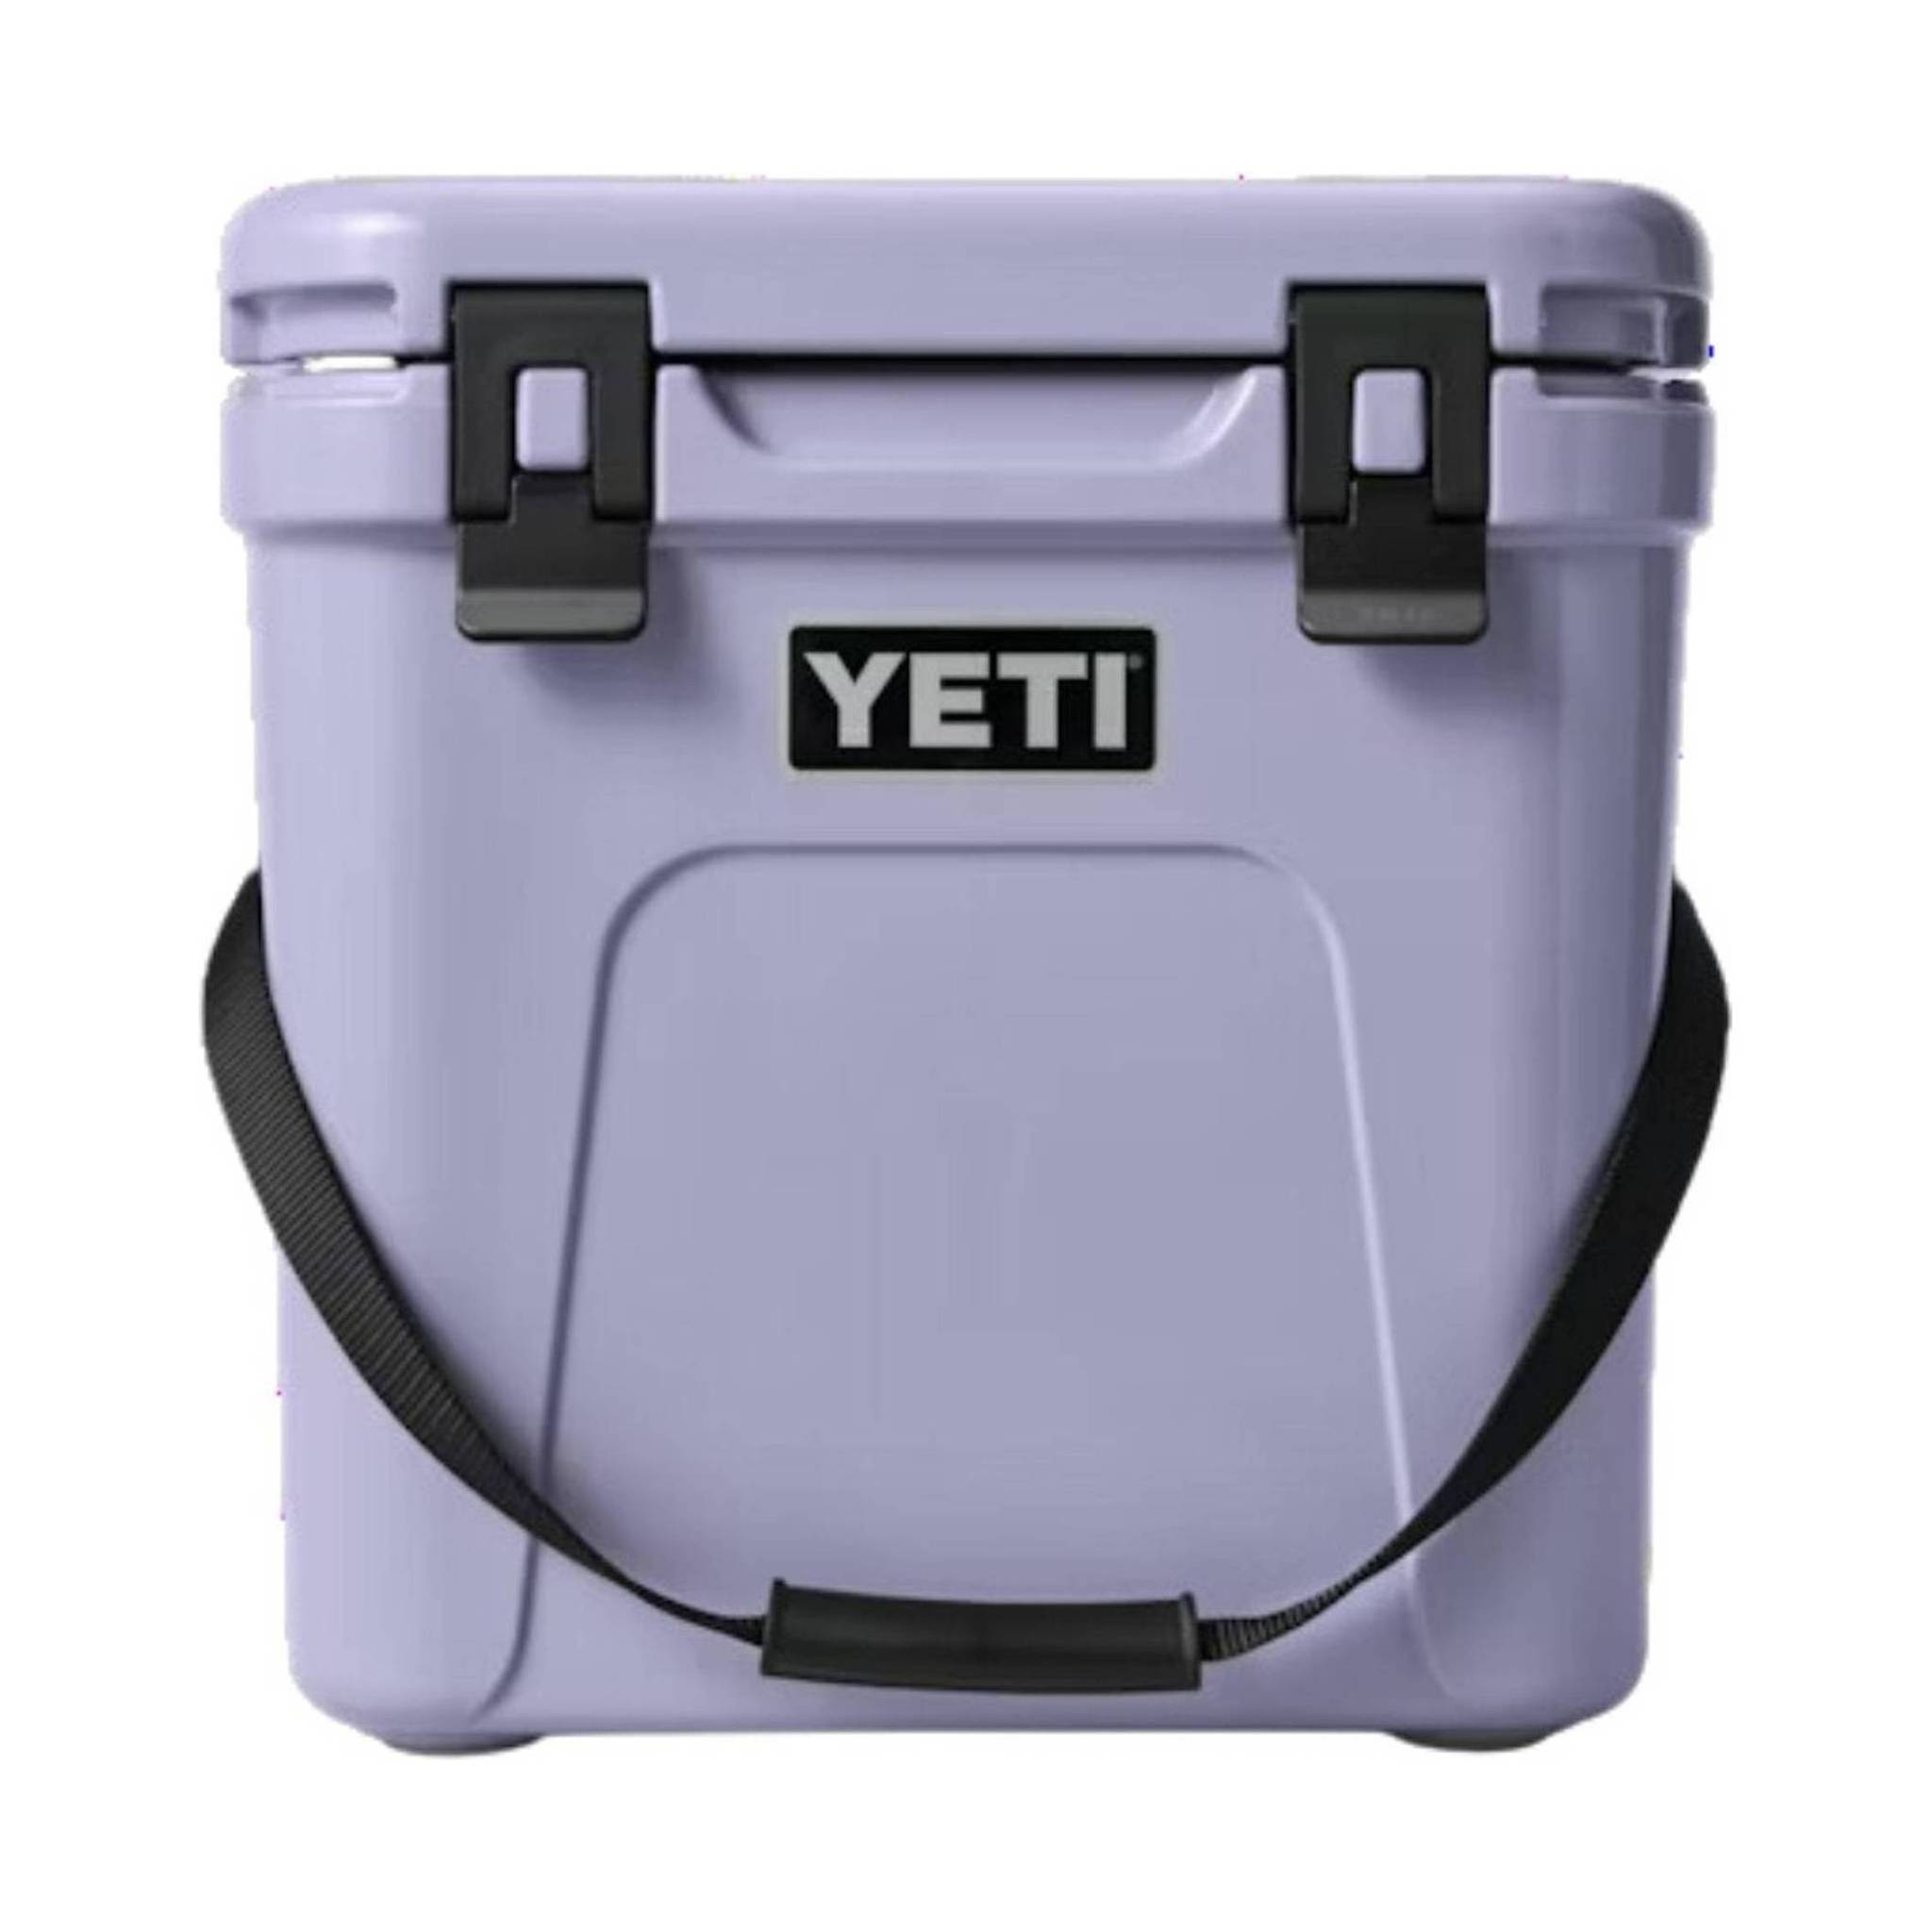 YETI Roadie 24 Hardside Cooler (Limited Edition Nordic Purple) – Lancaster  Archery Supply